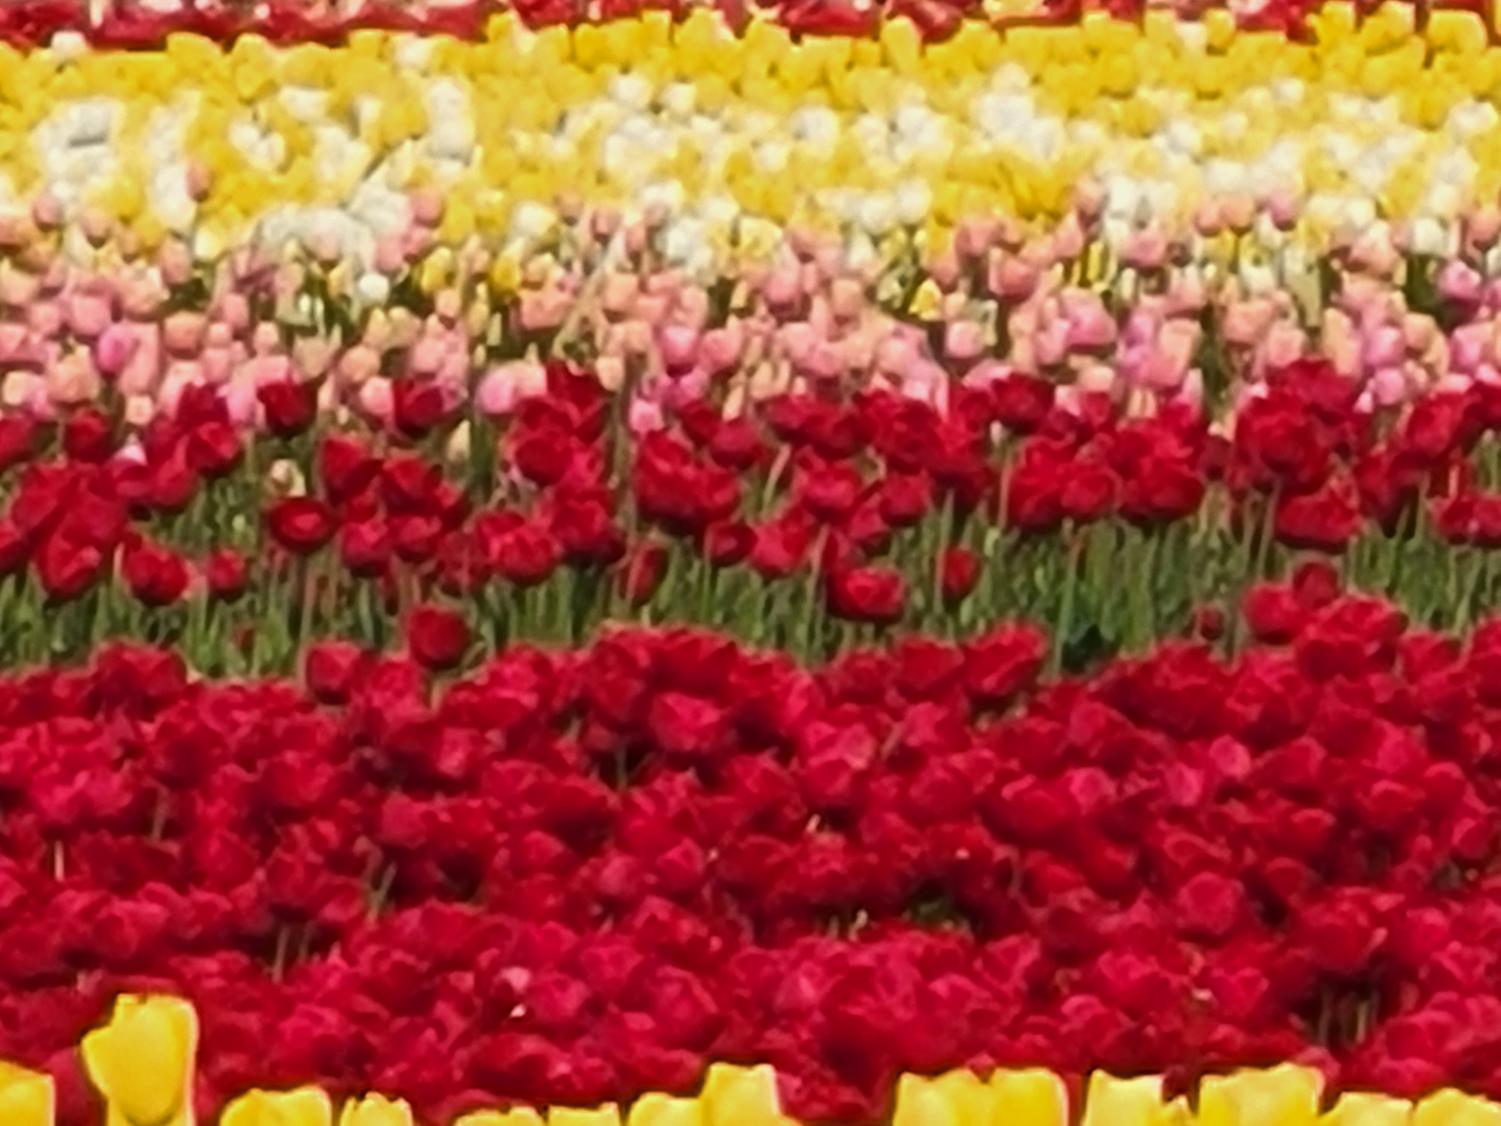 Too+late+for+tulips%3F+A+taste+of+Washingtons+tulip+festival